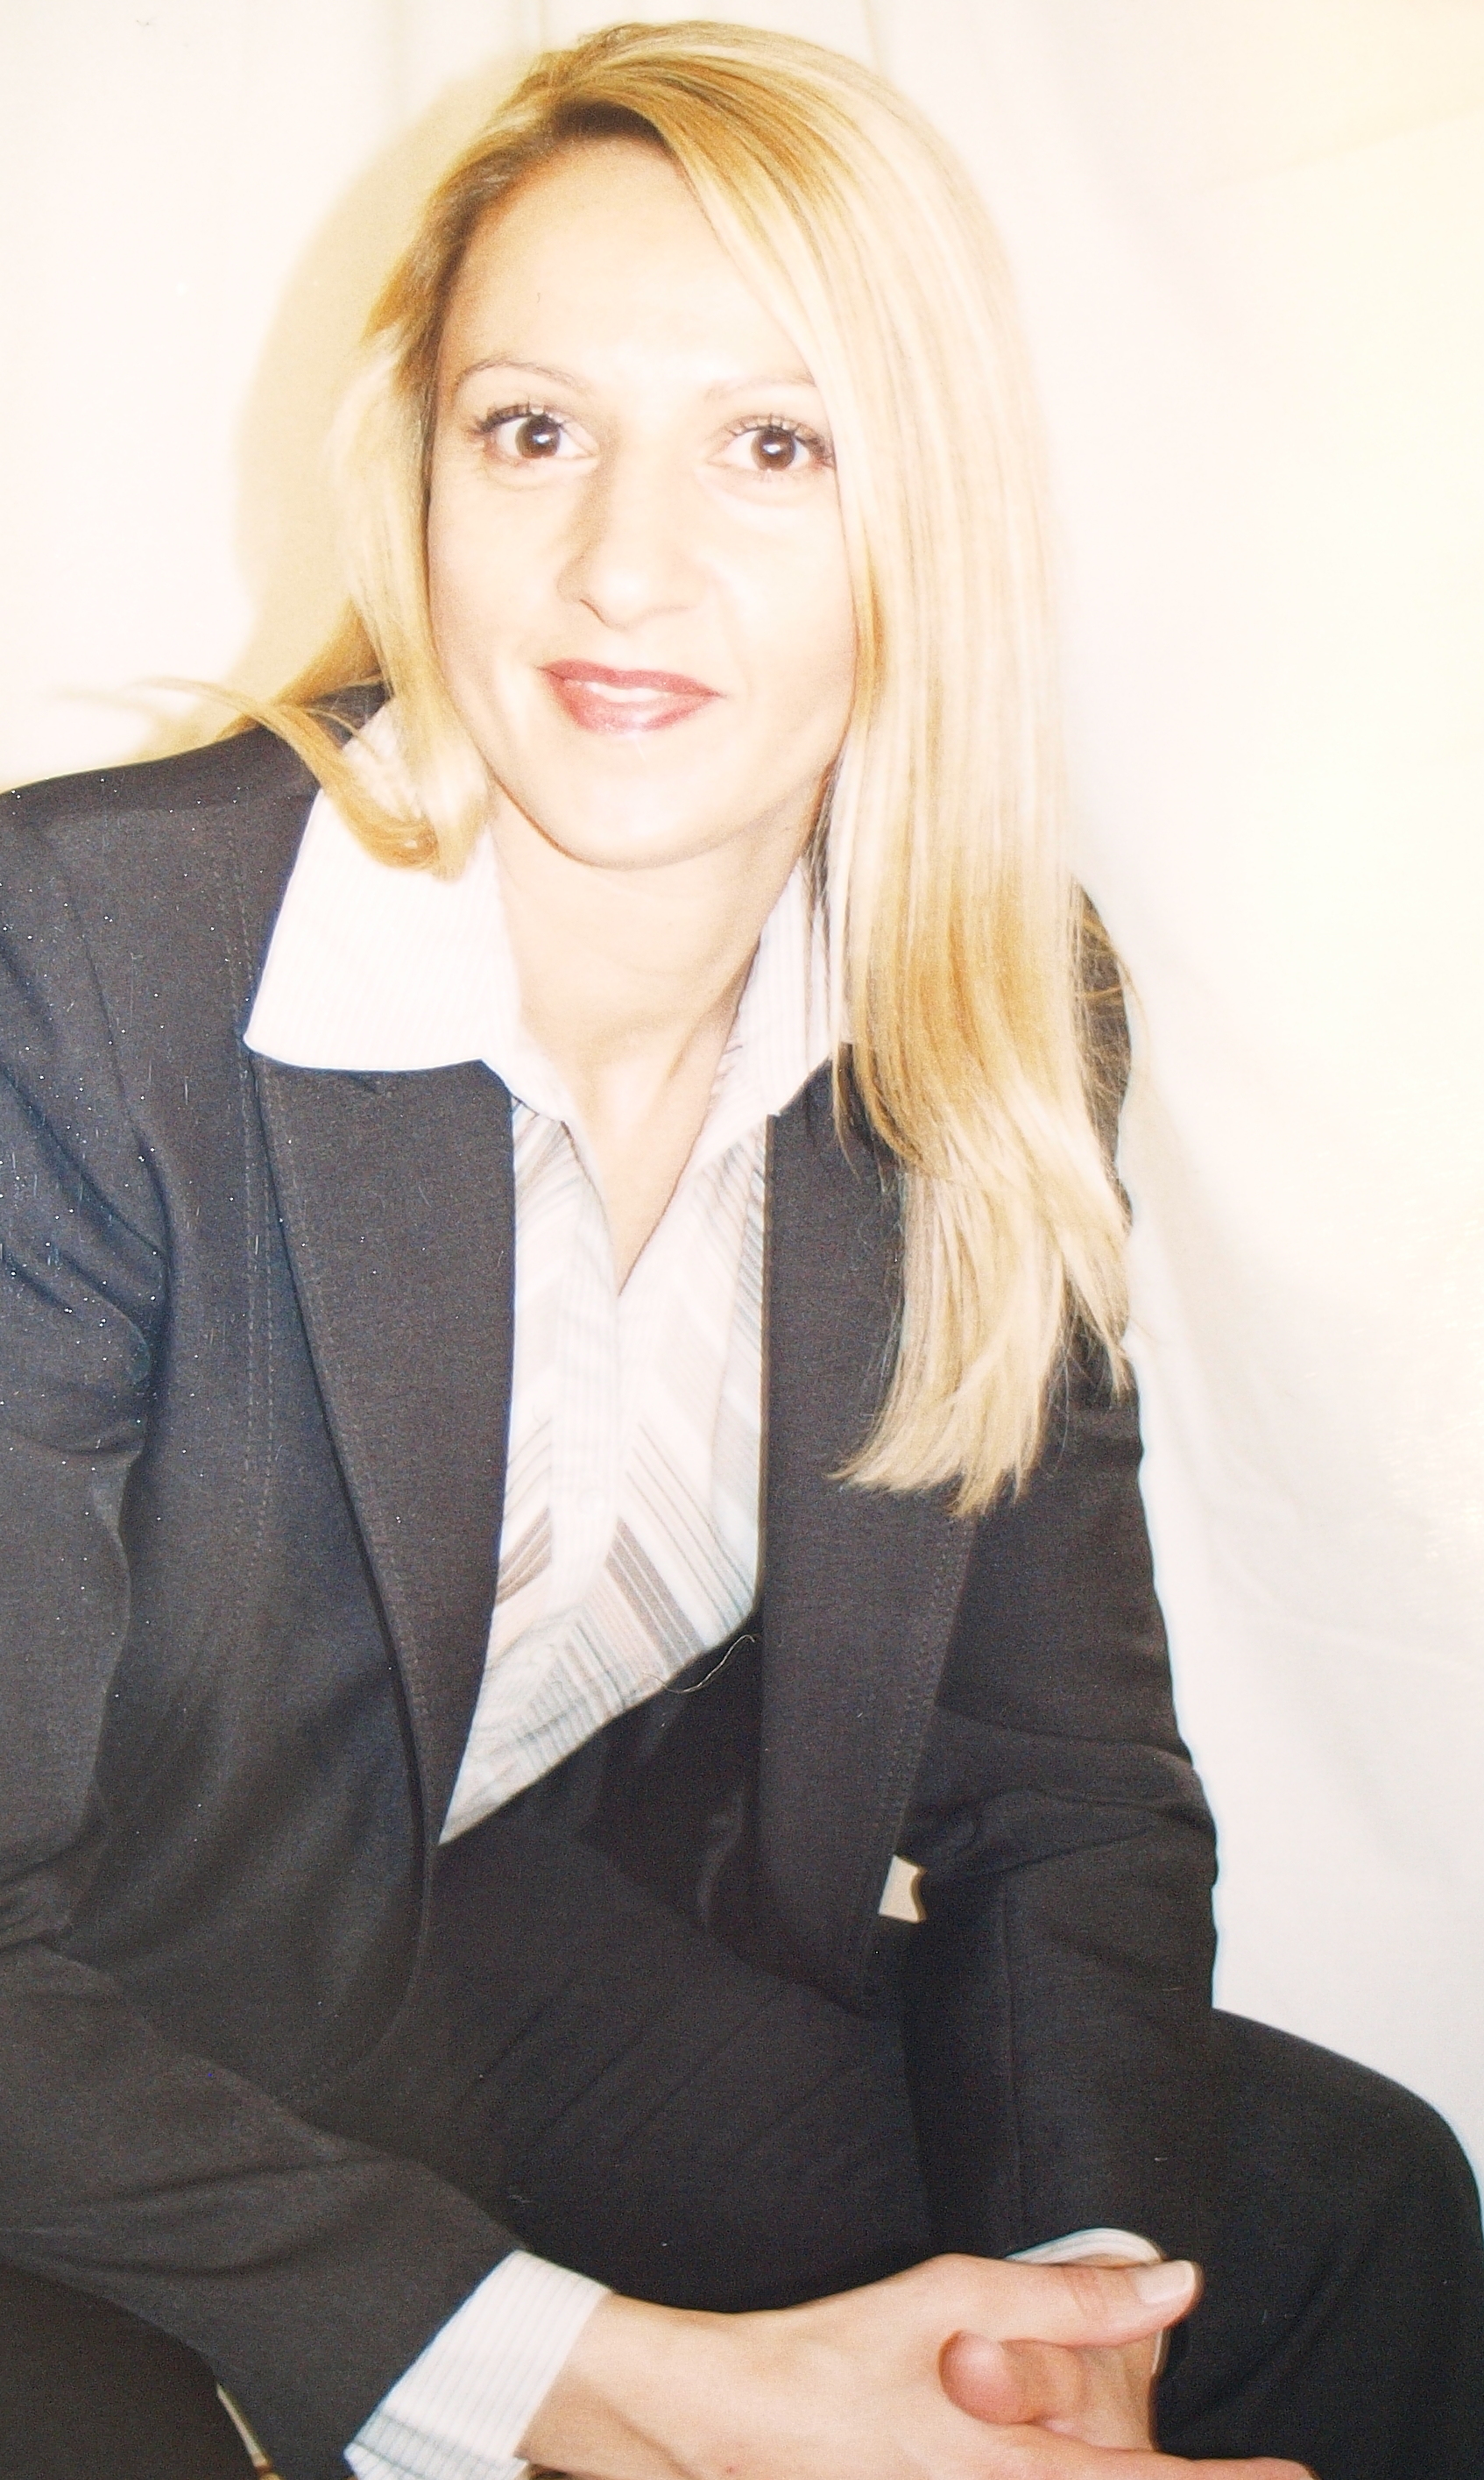 Nikki Bednall (2005) Business Manager